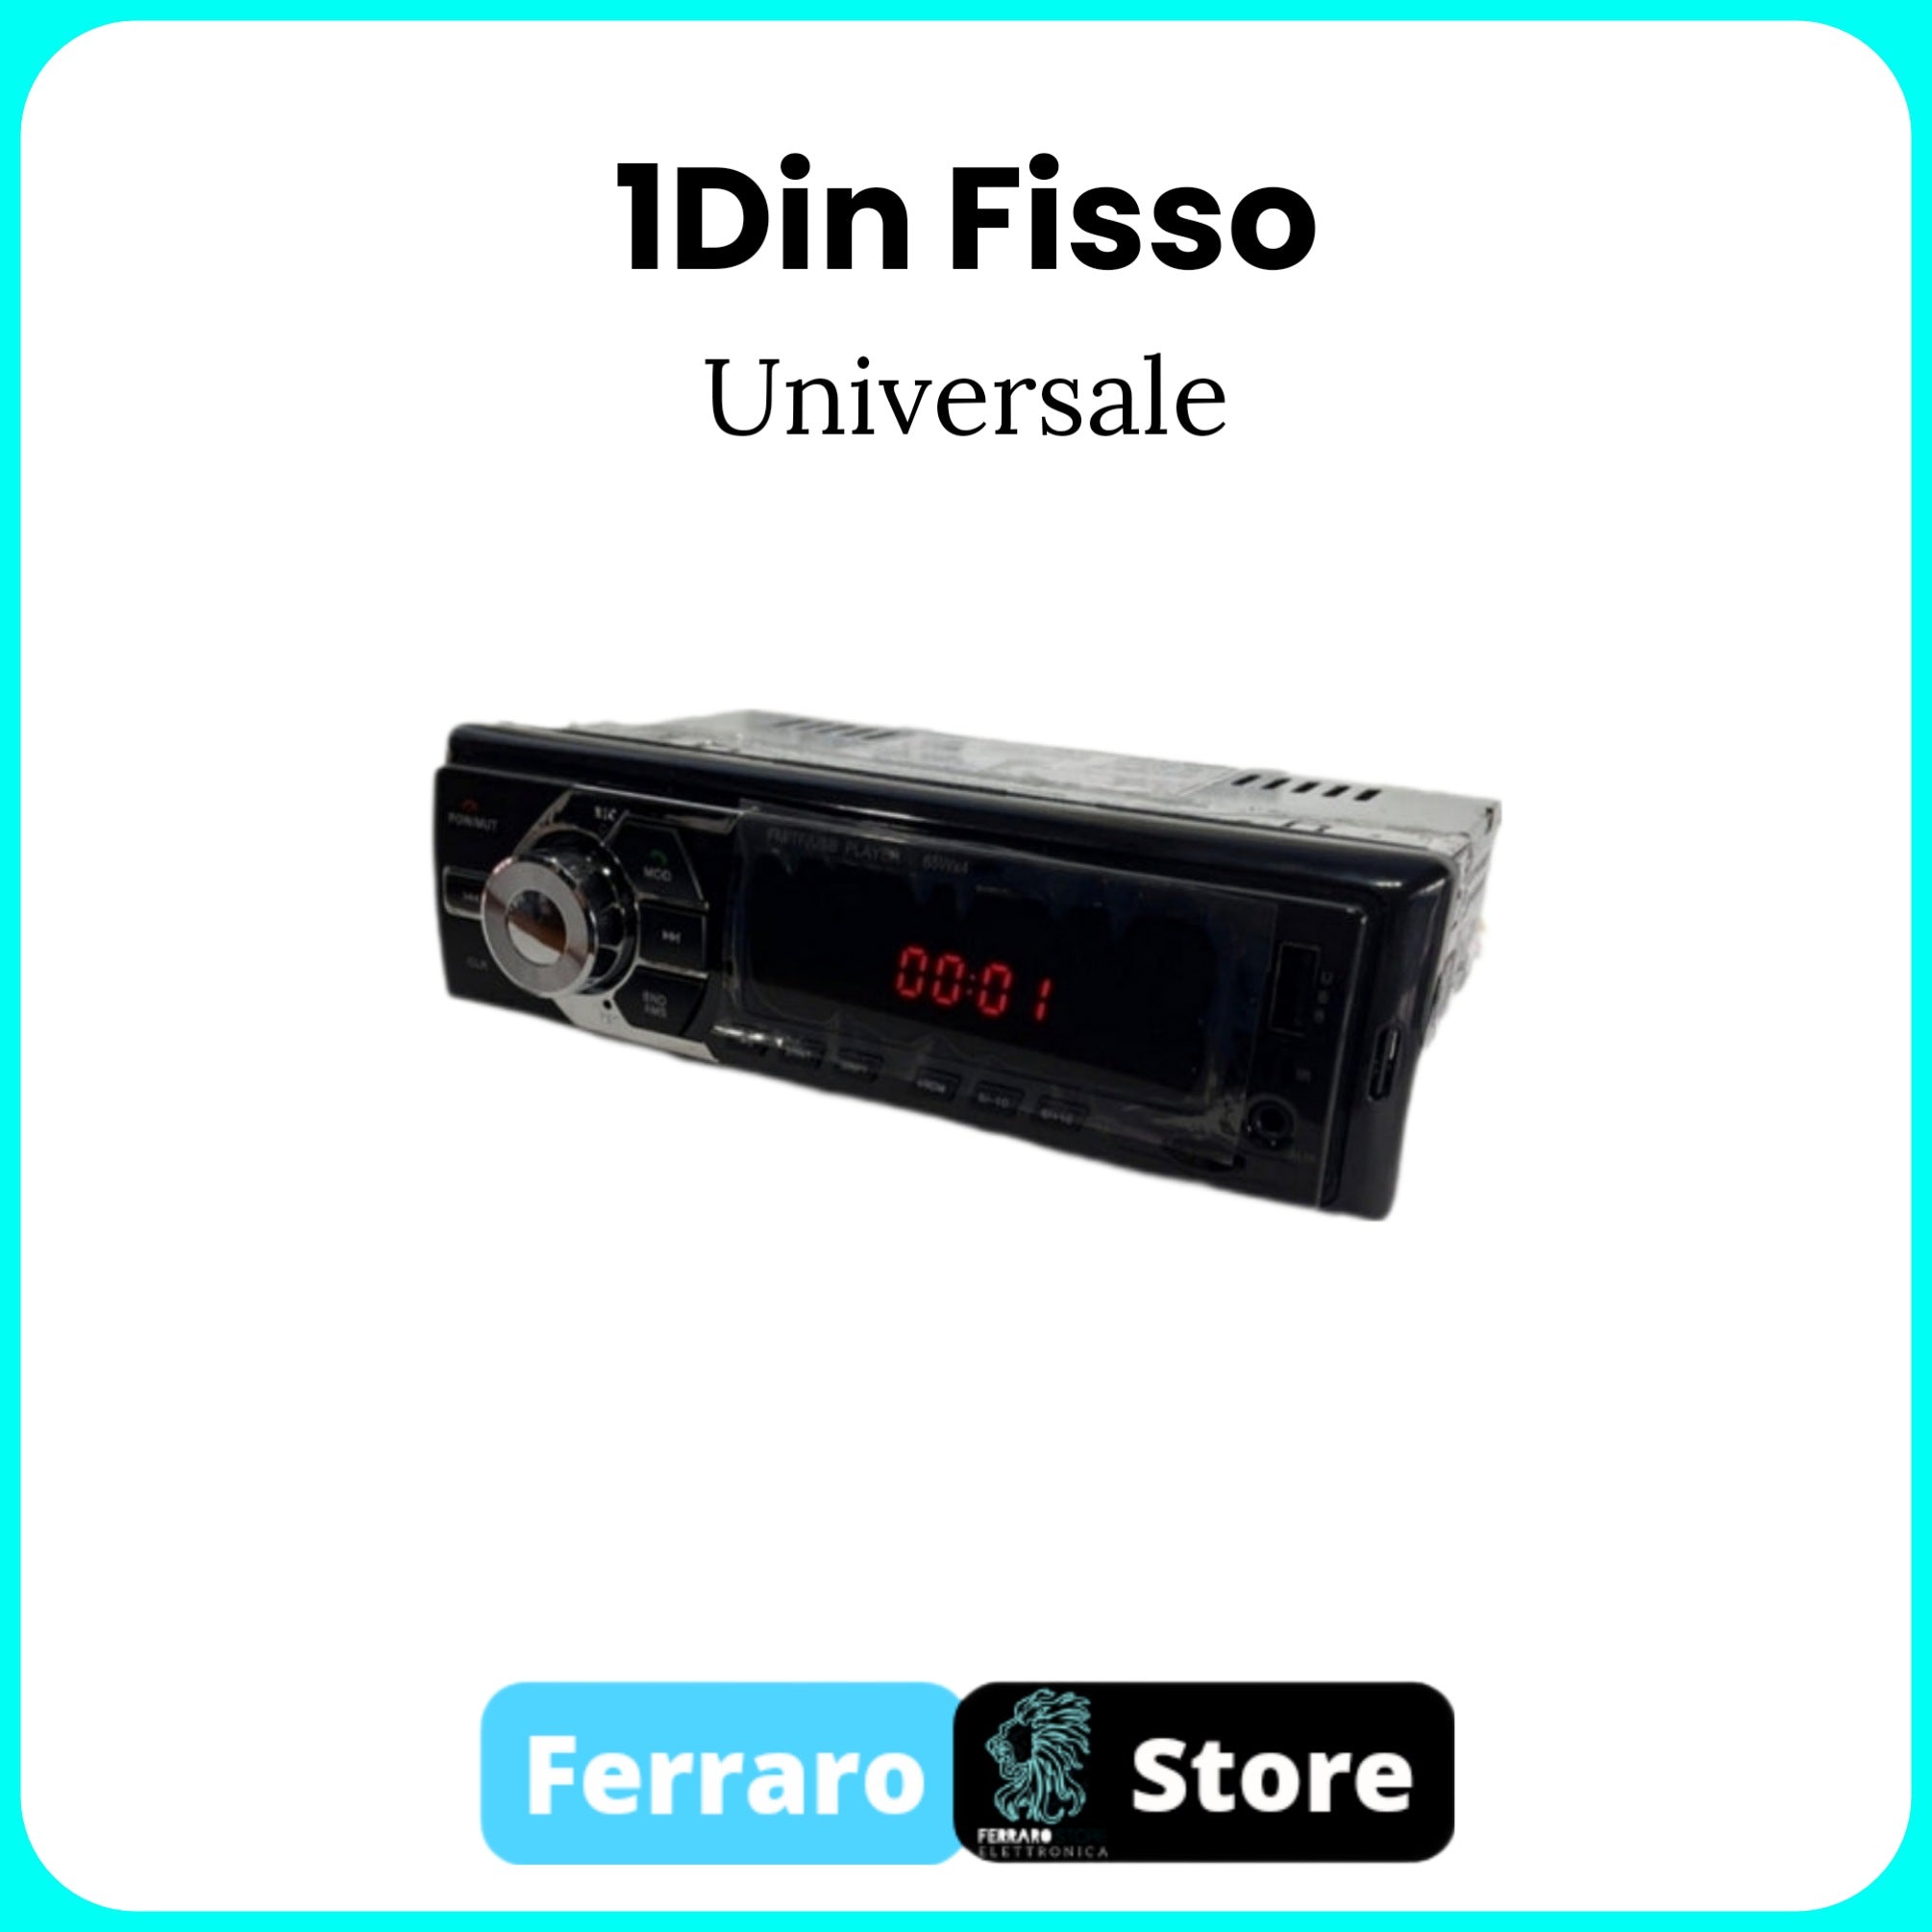 Autoradio Universale [FISSO] - 1Din, Universale, Bluetooth, Radio, Audio, Musica, Stereo 12V Autoradio USB/SD/AUX.